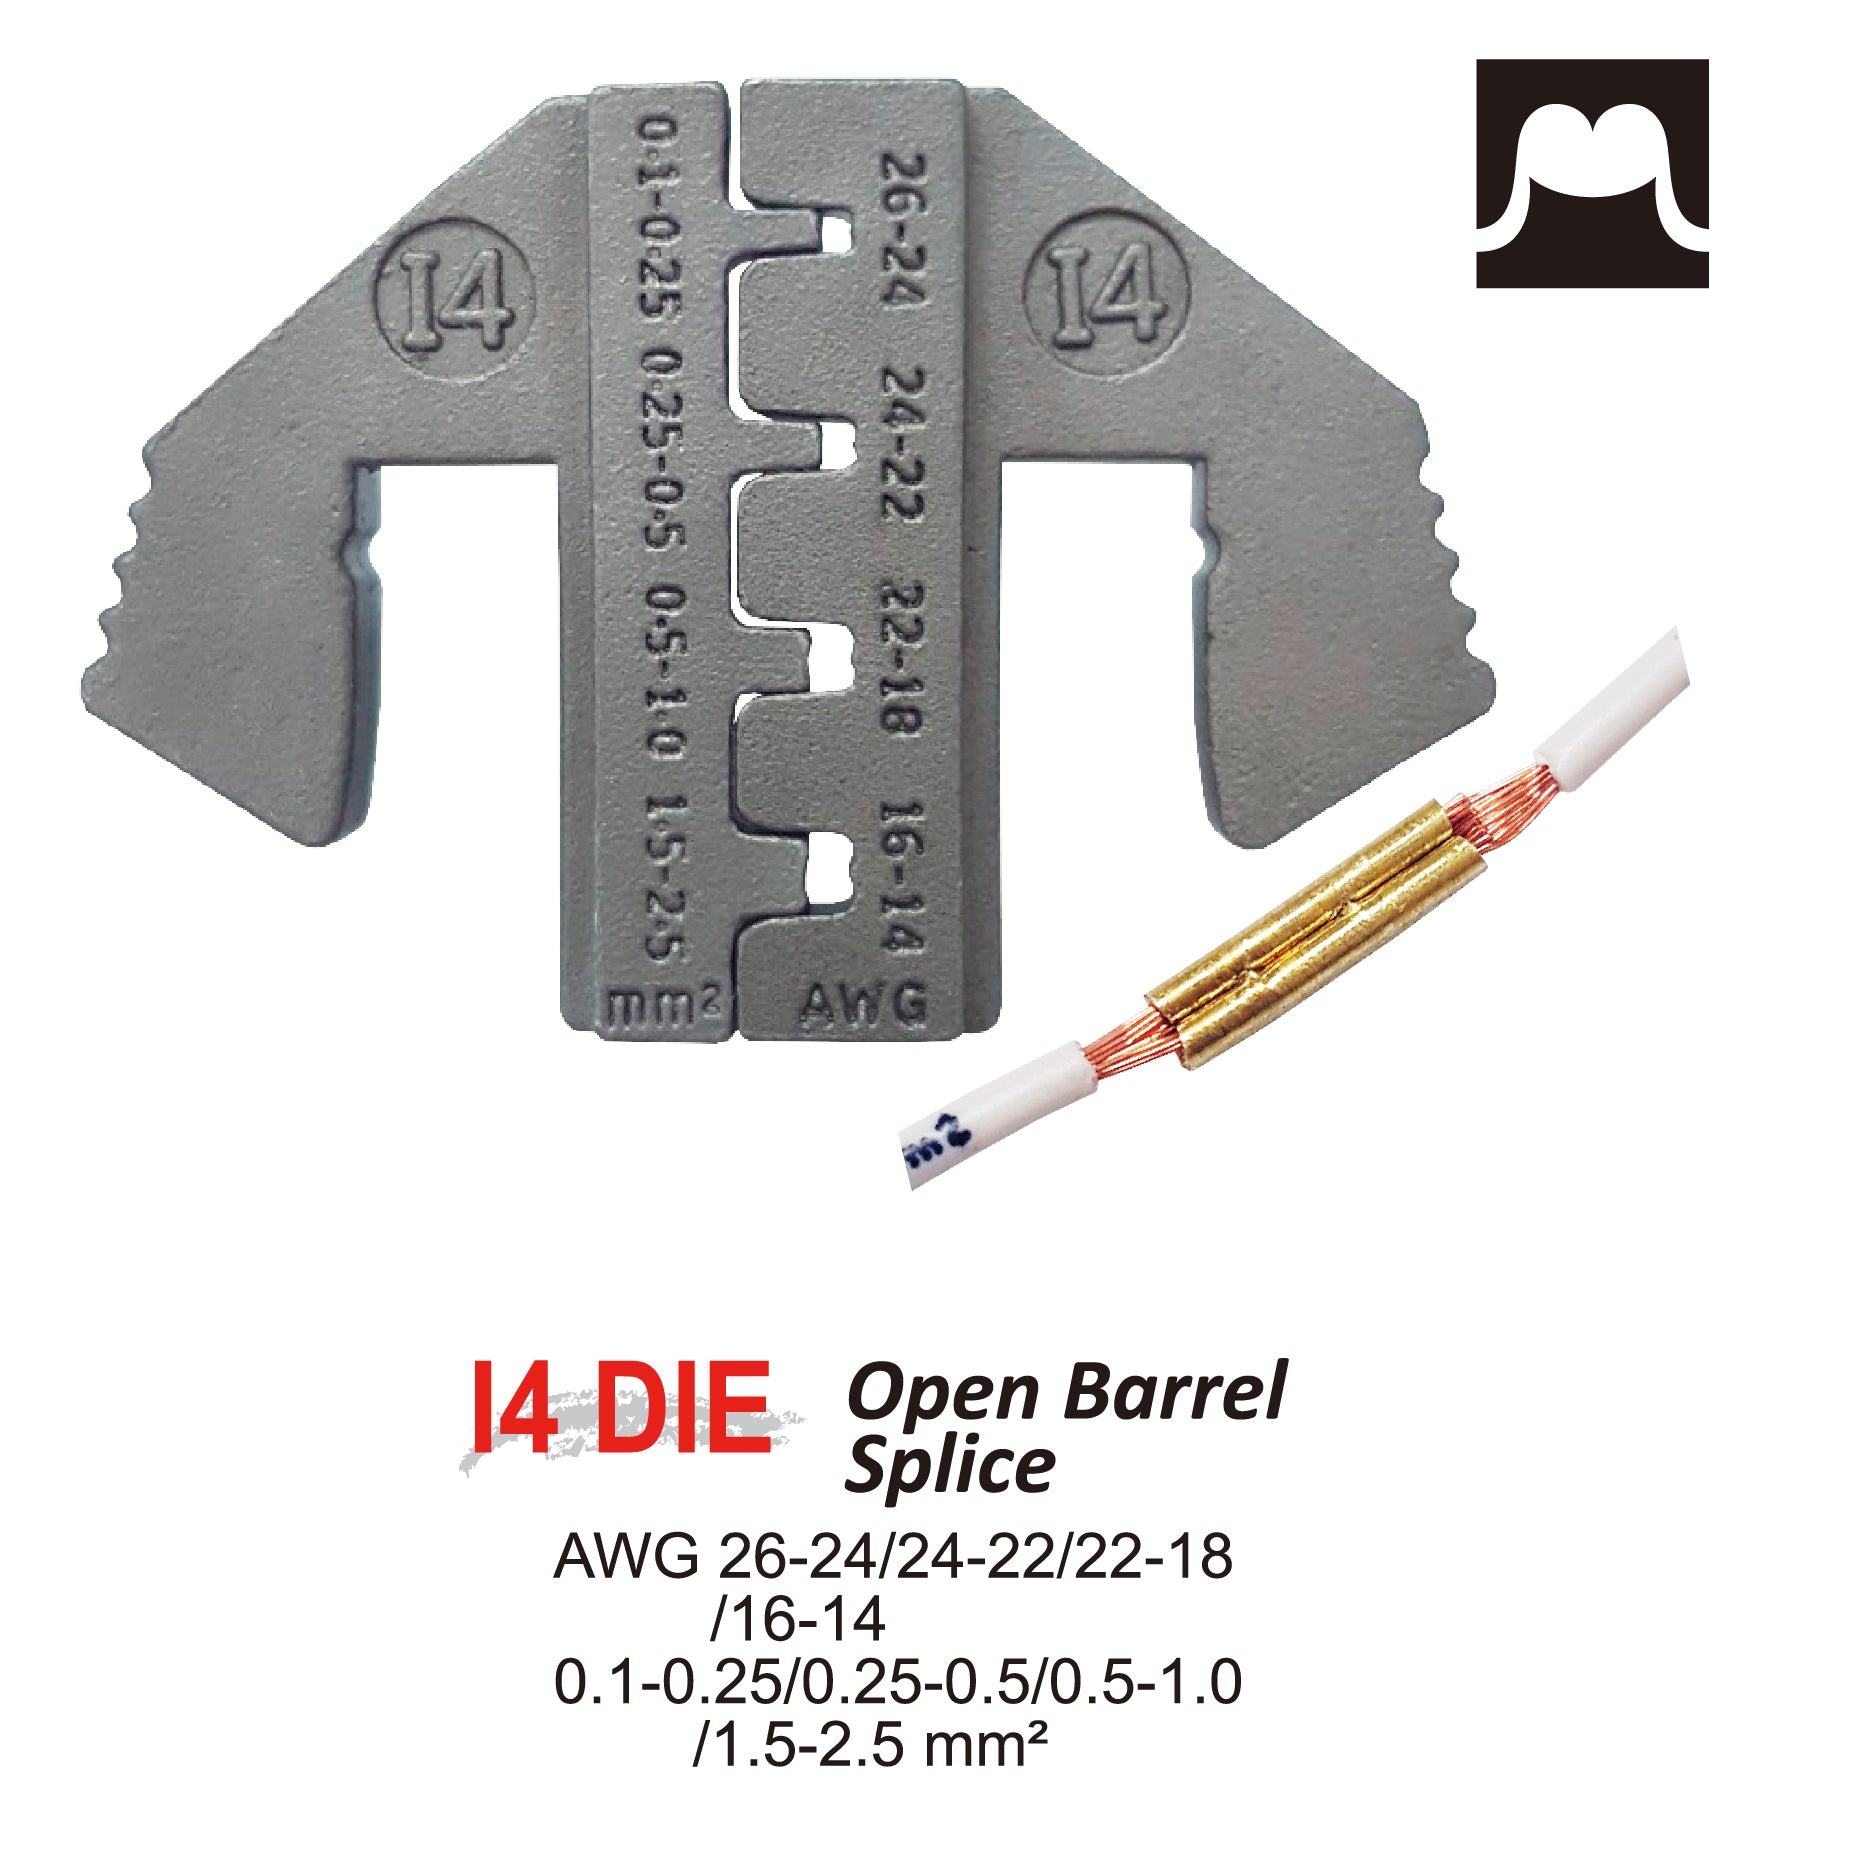 Crimping Tool Die - I4 Die for Open Barrel Splice AWG 26-24/24-22/22-18/16-14